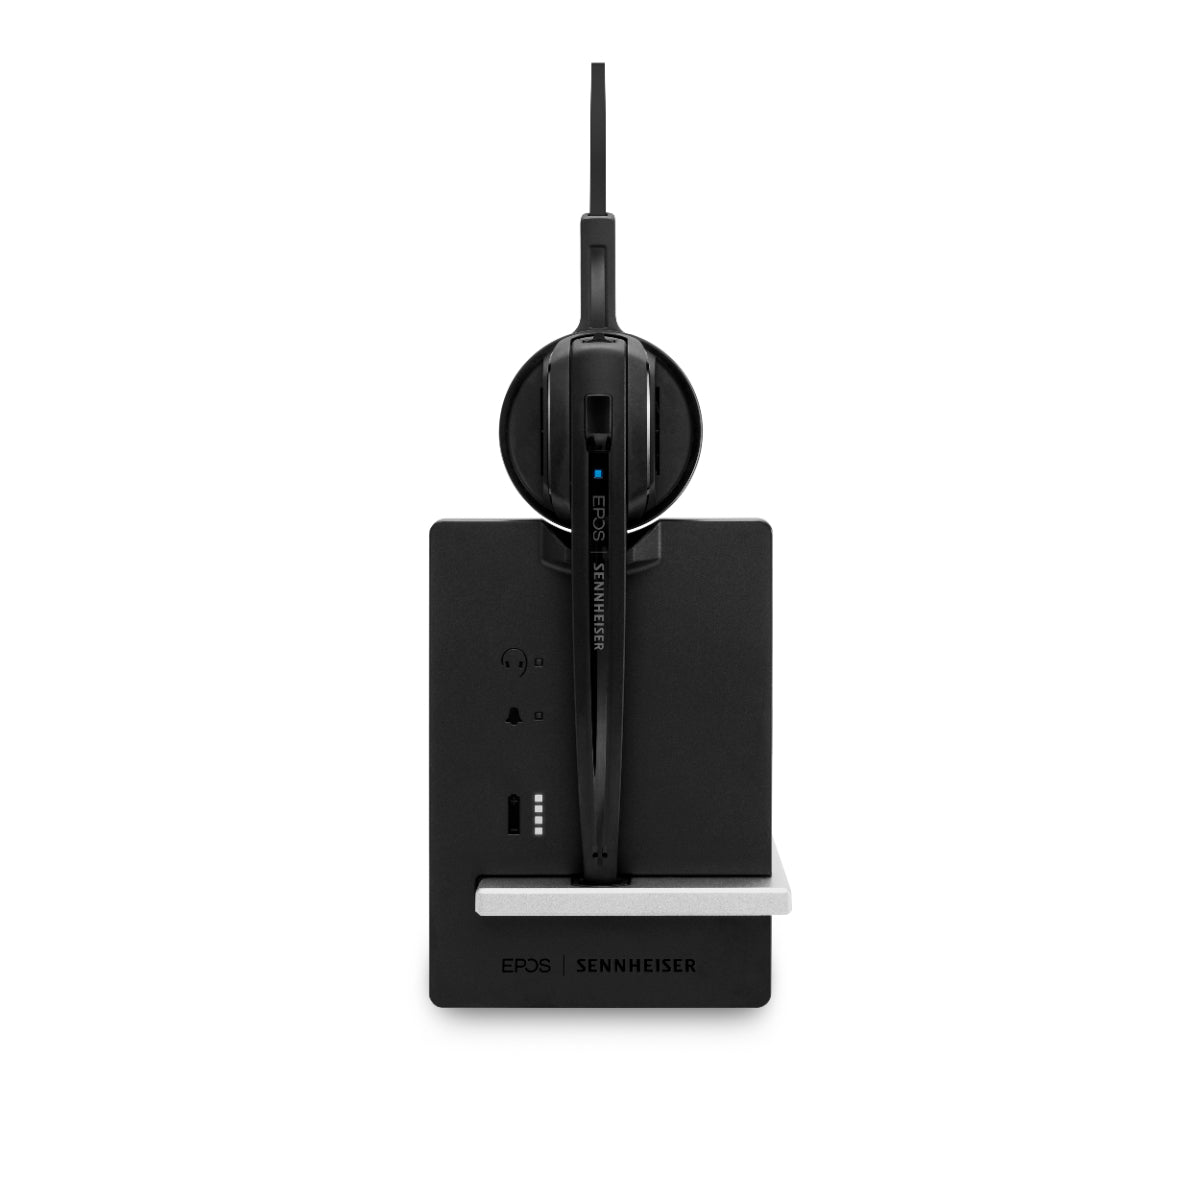 EPOS IMPACT D 10 USB ML - EU Wireless Monaural DECT Headset, Black, Headband/Neckband/Earhook